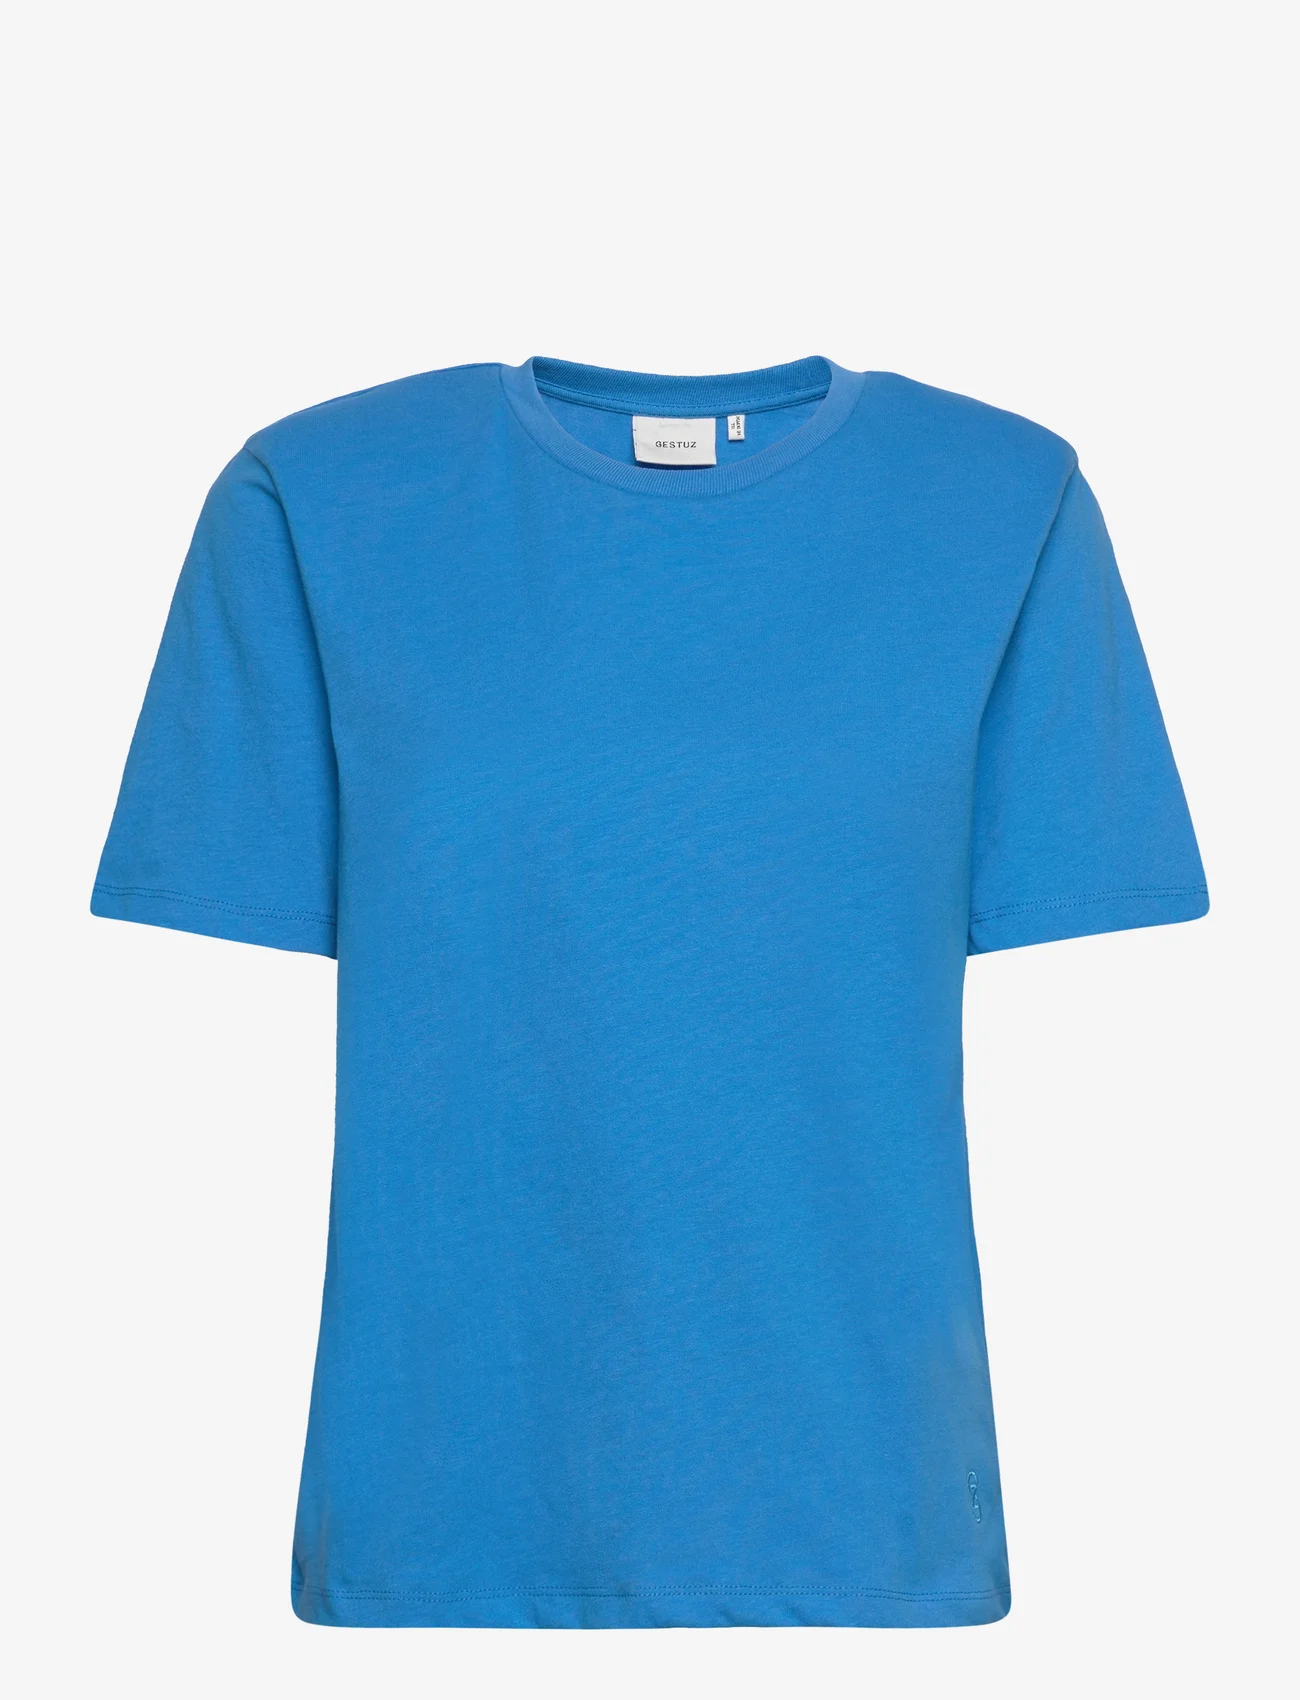 Gestuz - JoryGZ tee - t-shirts - malibu blue - 1